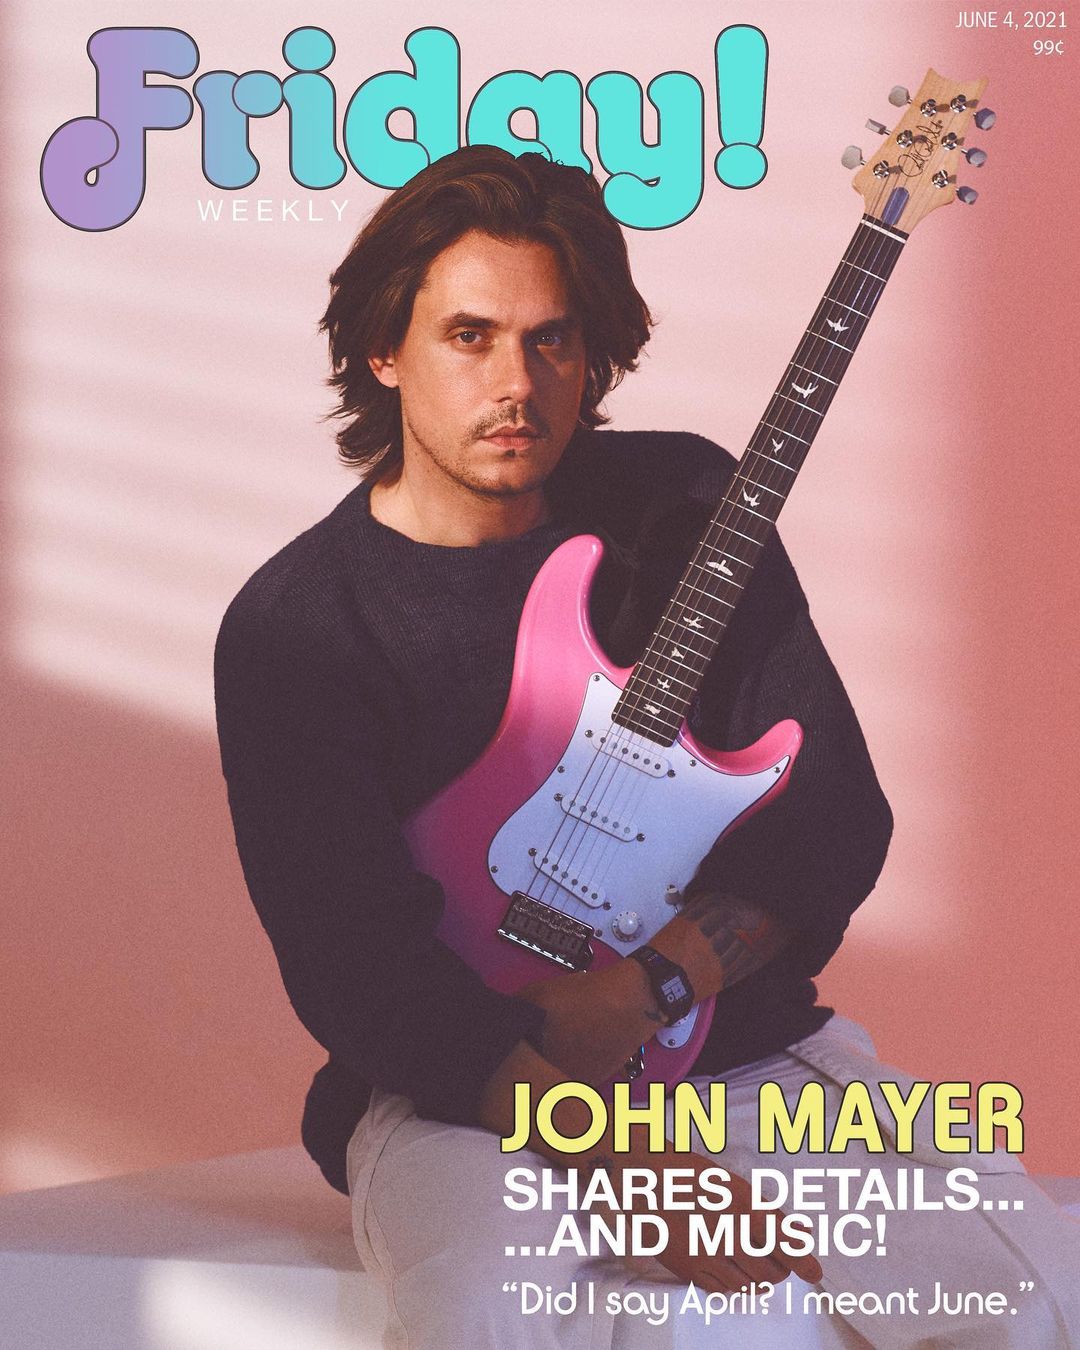 John Mayer ส่งกีตาร์ให้ โรเซ่ BLACKPINK หลังคัฟเวอร์เพลง